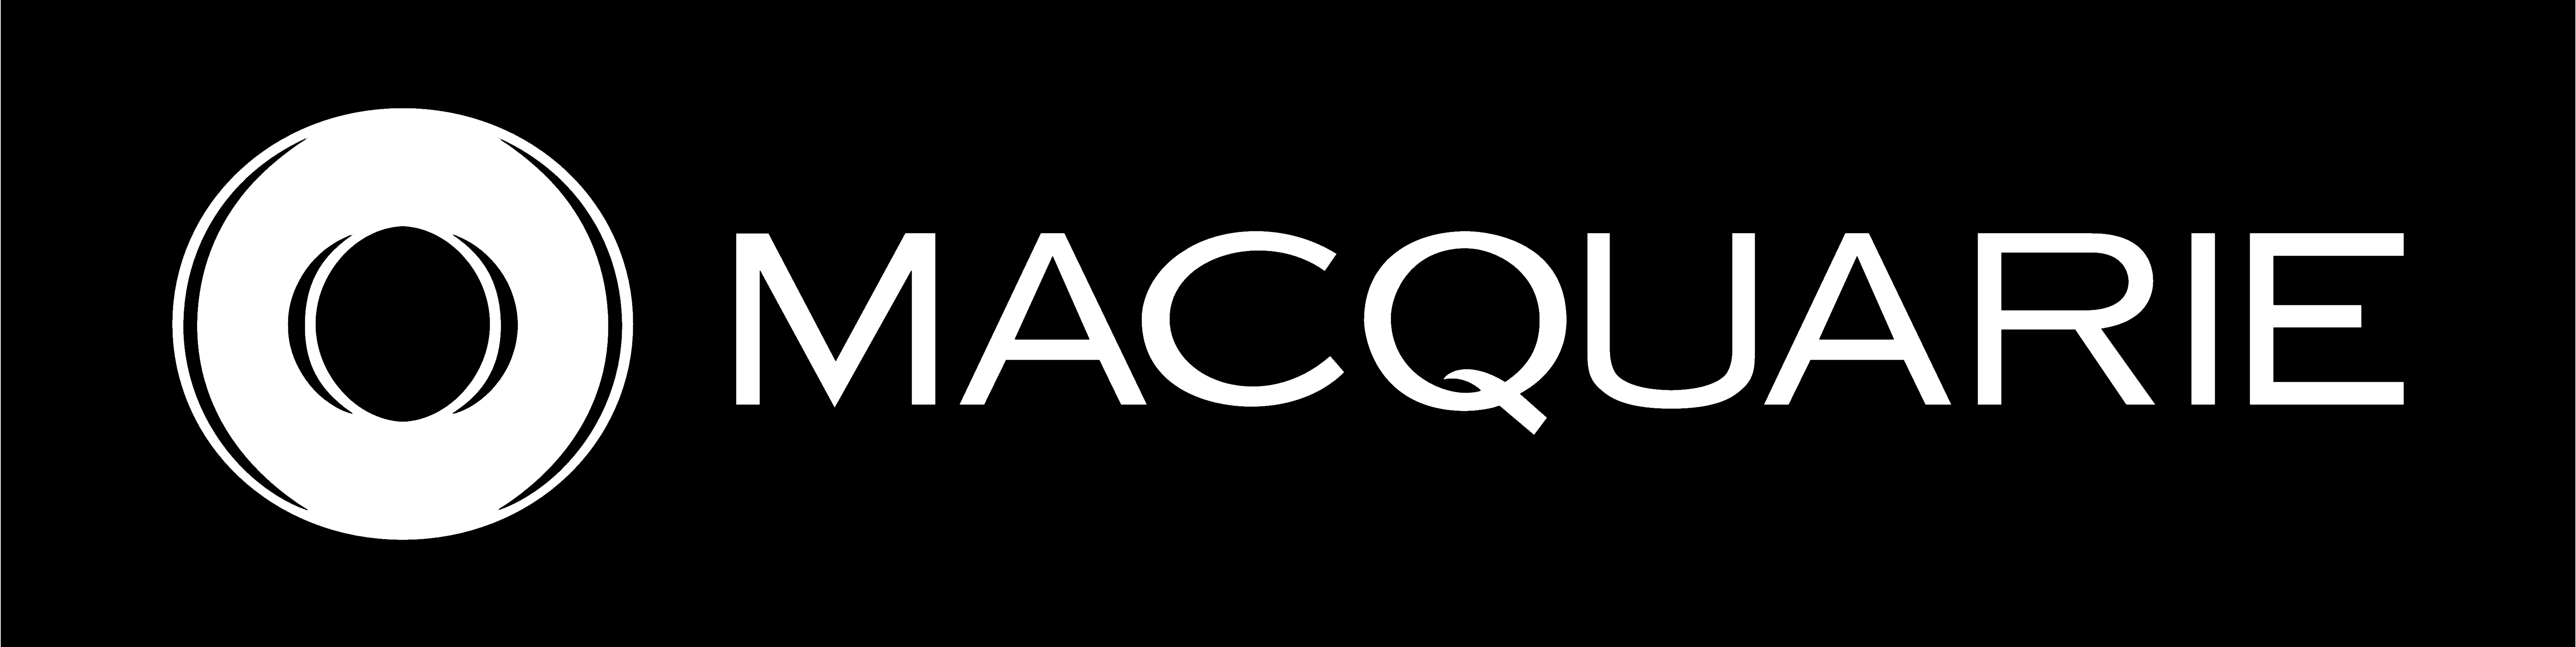 Macquarie Logo - Macquarie